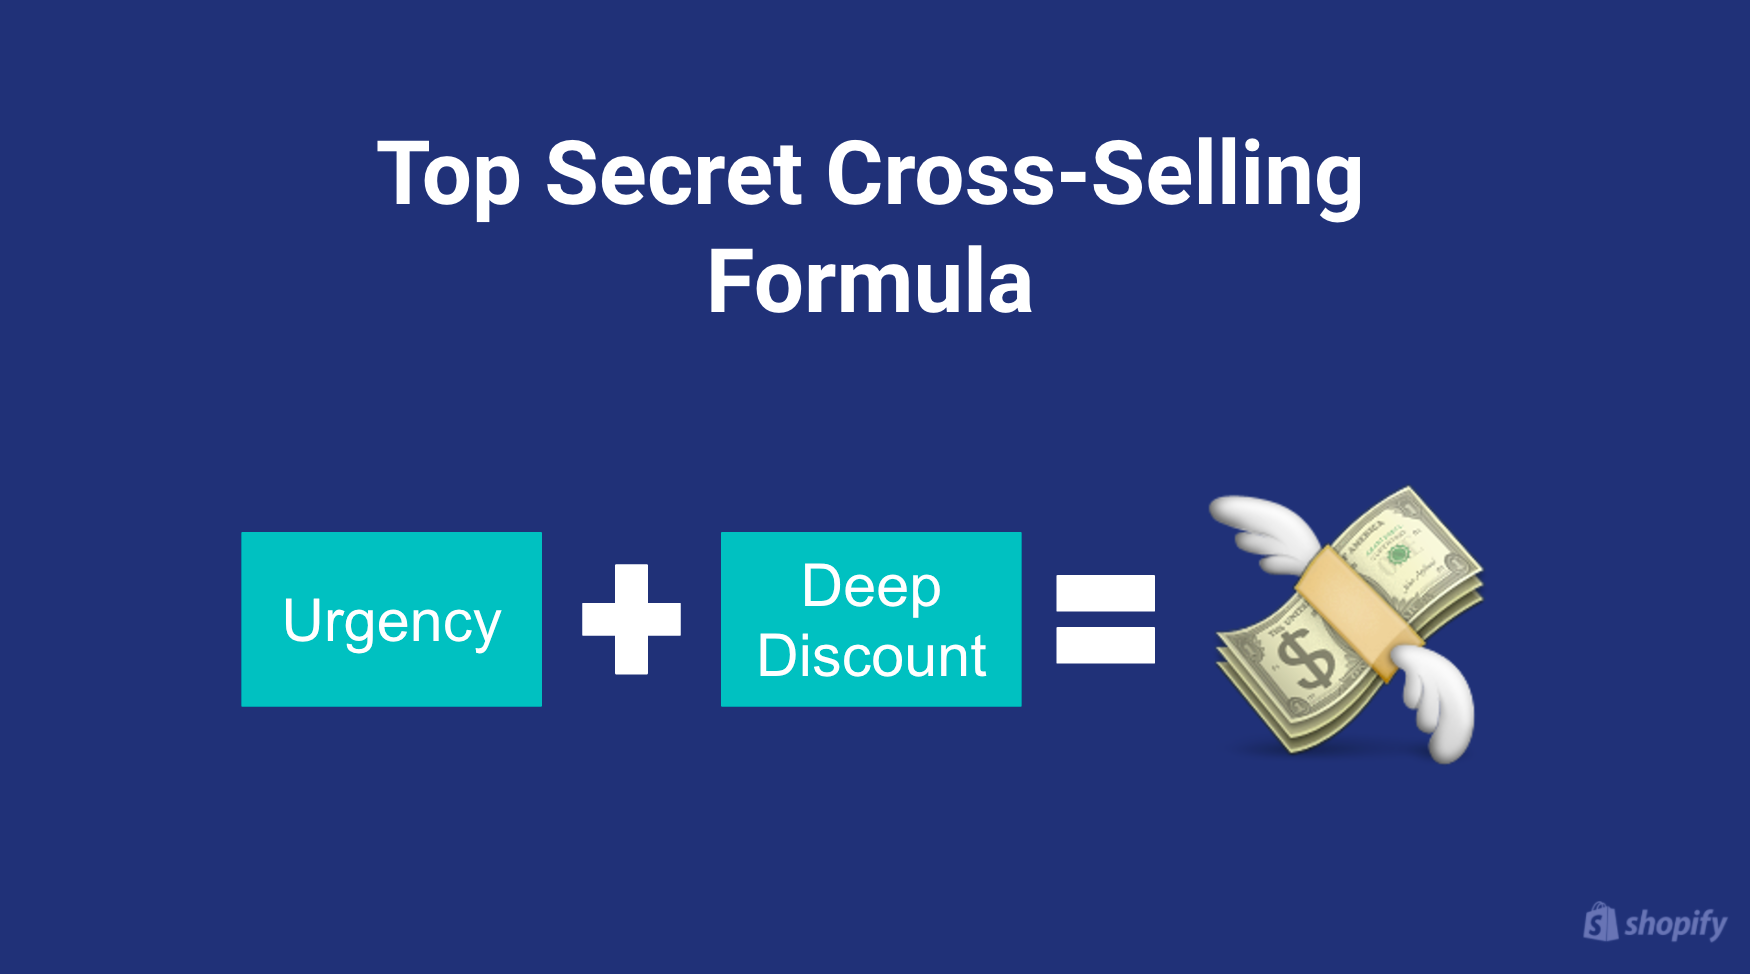 Top secret cross-selling formula